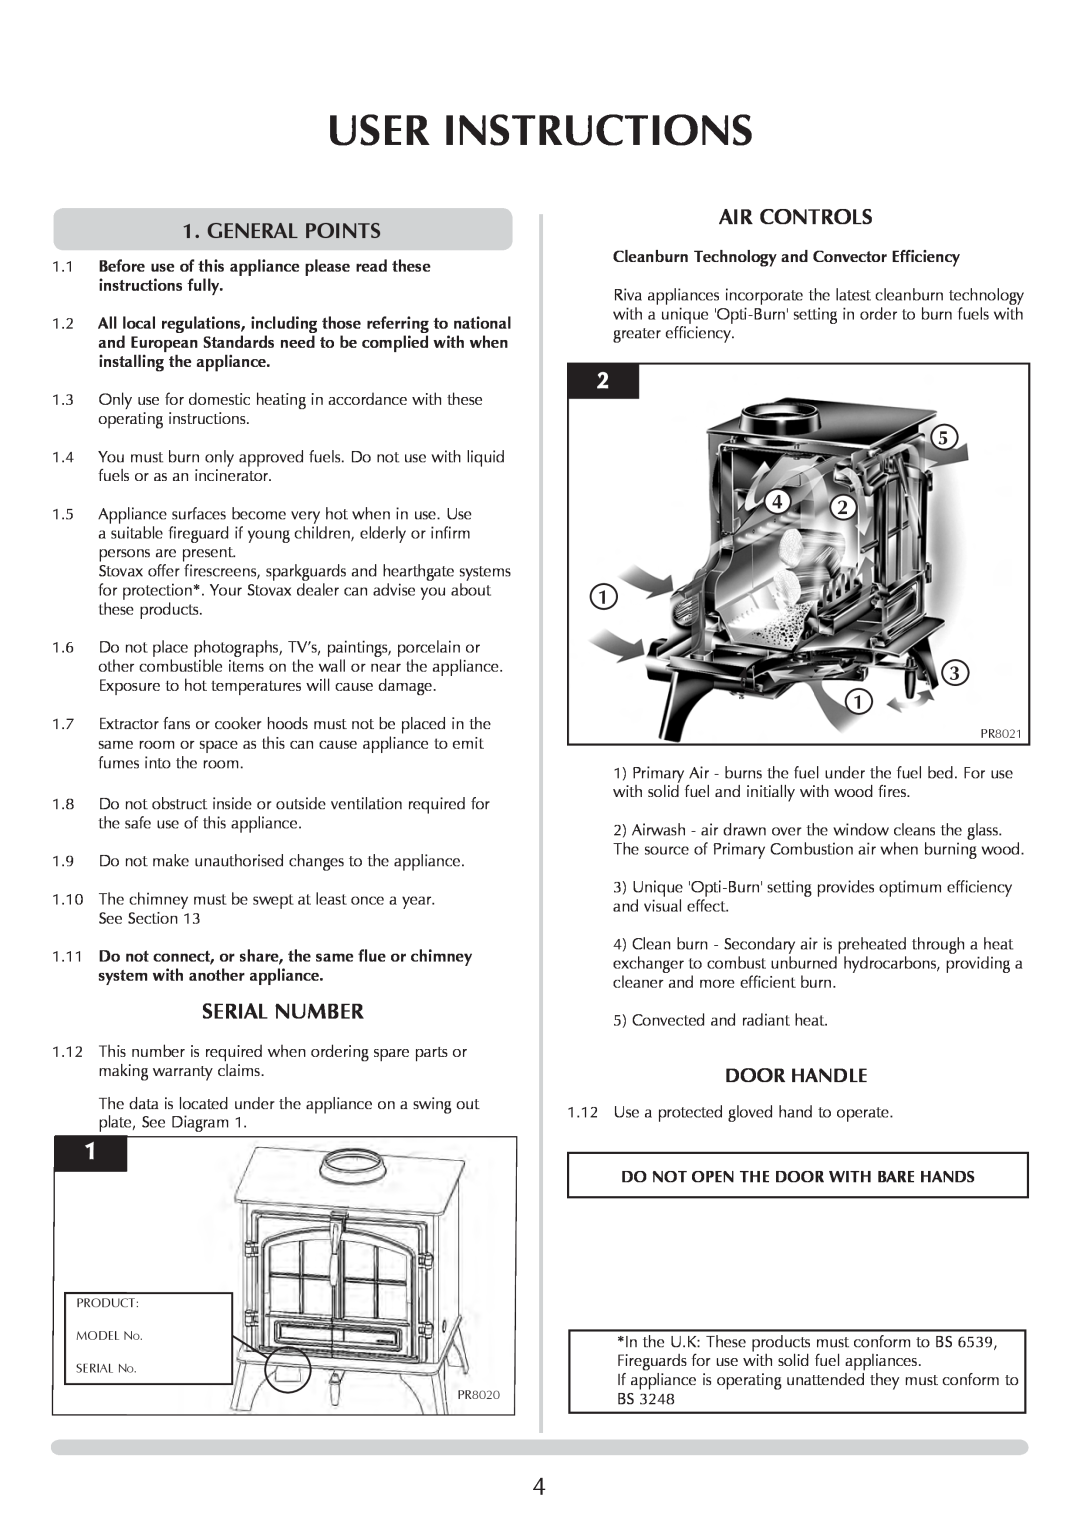 Stovax Midi Wood & Multi-fuel manual User Instructions, General POINTS, Serial Number, Air Controls, Door Handle 